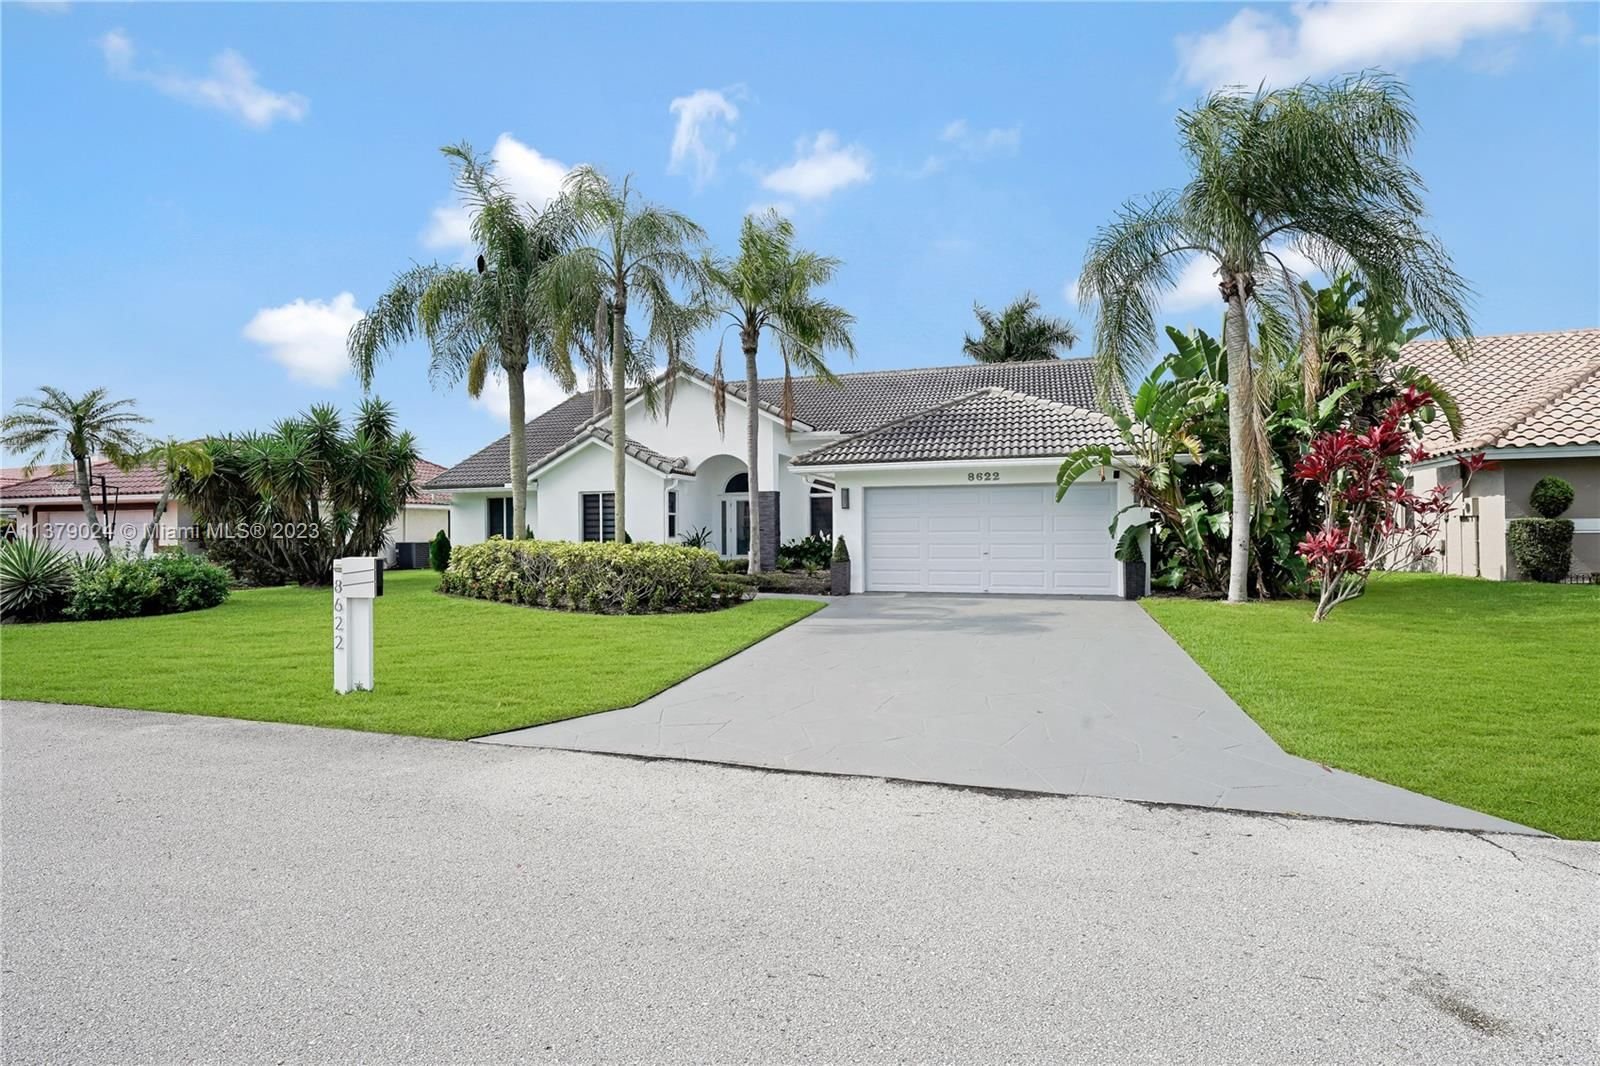 Real estate property located at 8622 79th St, Broward County, Tamarac, FL